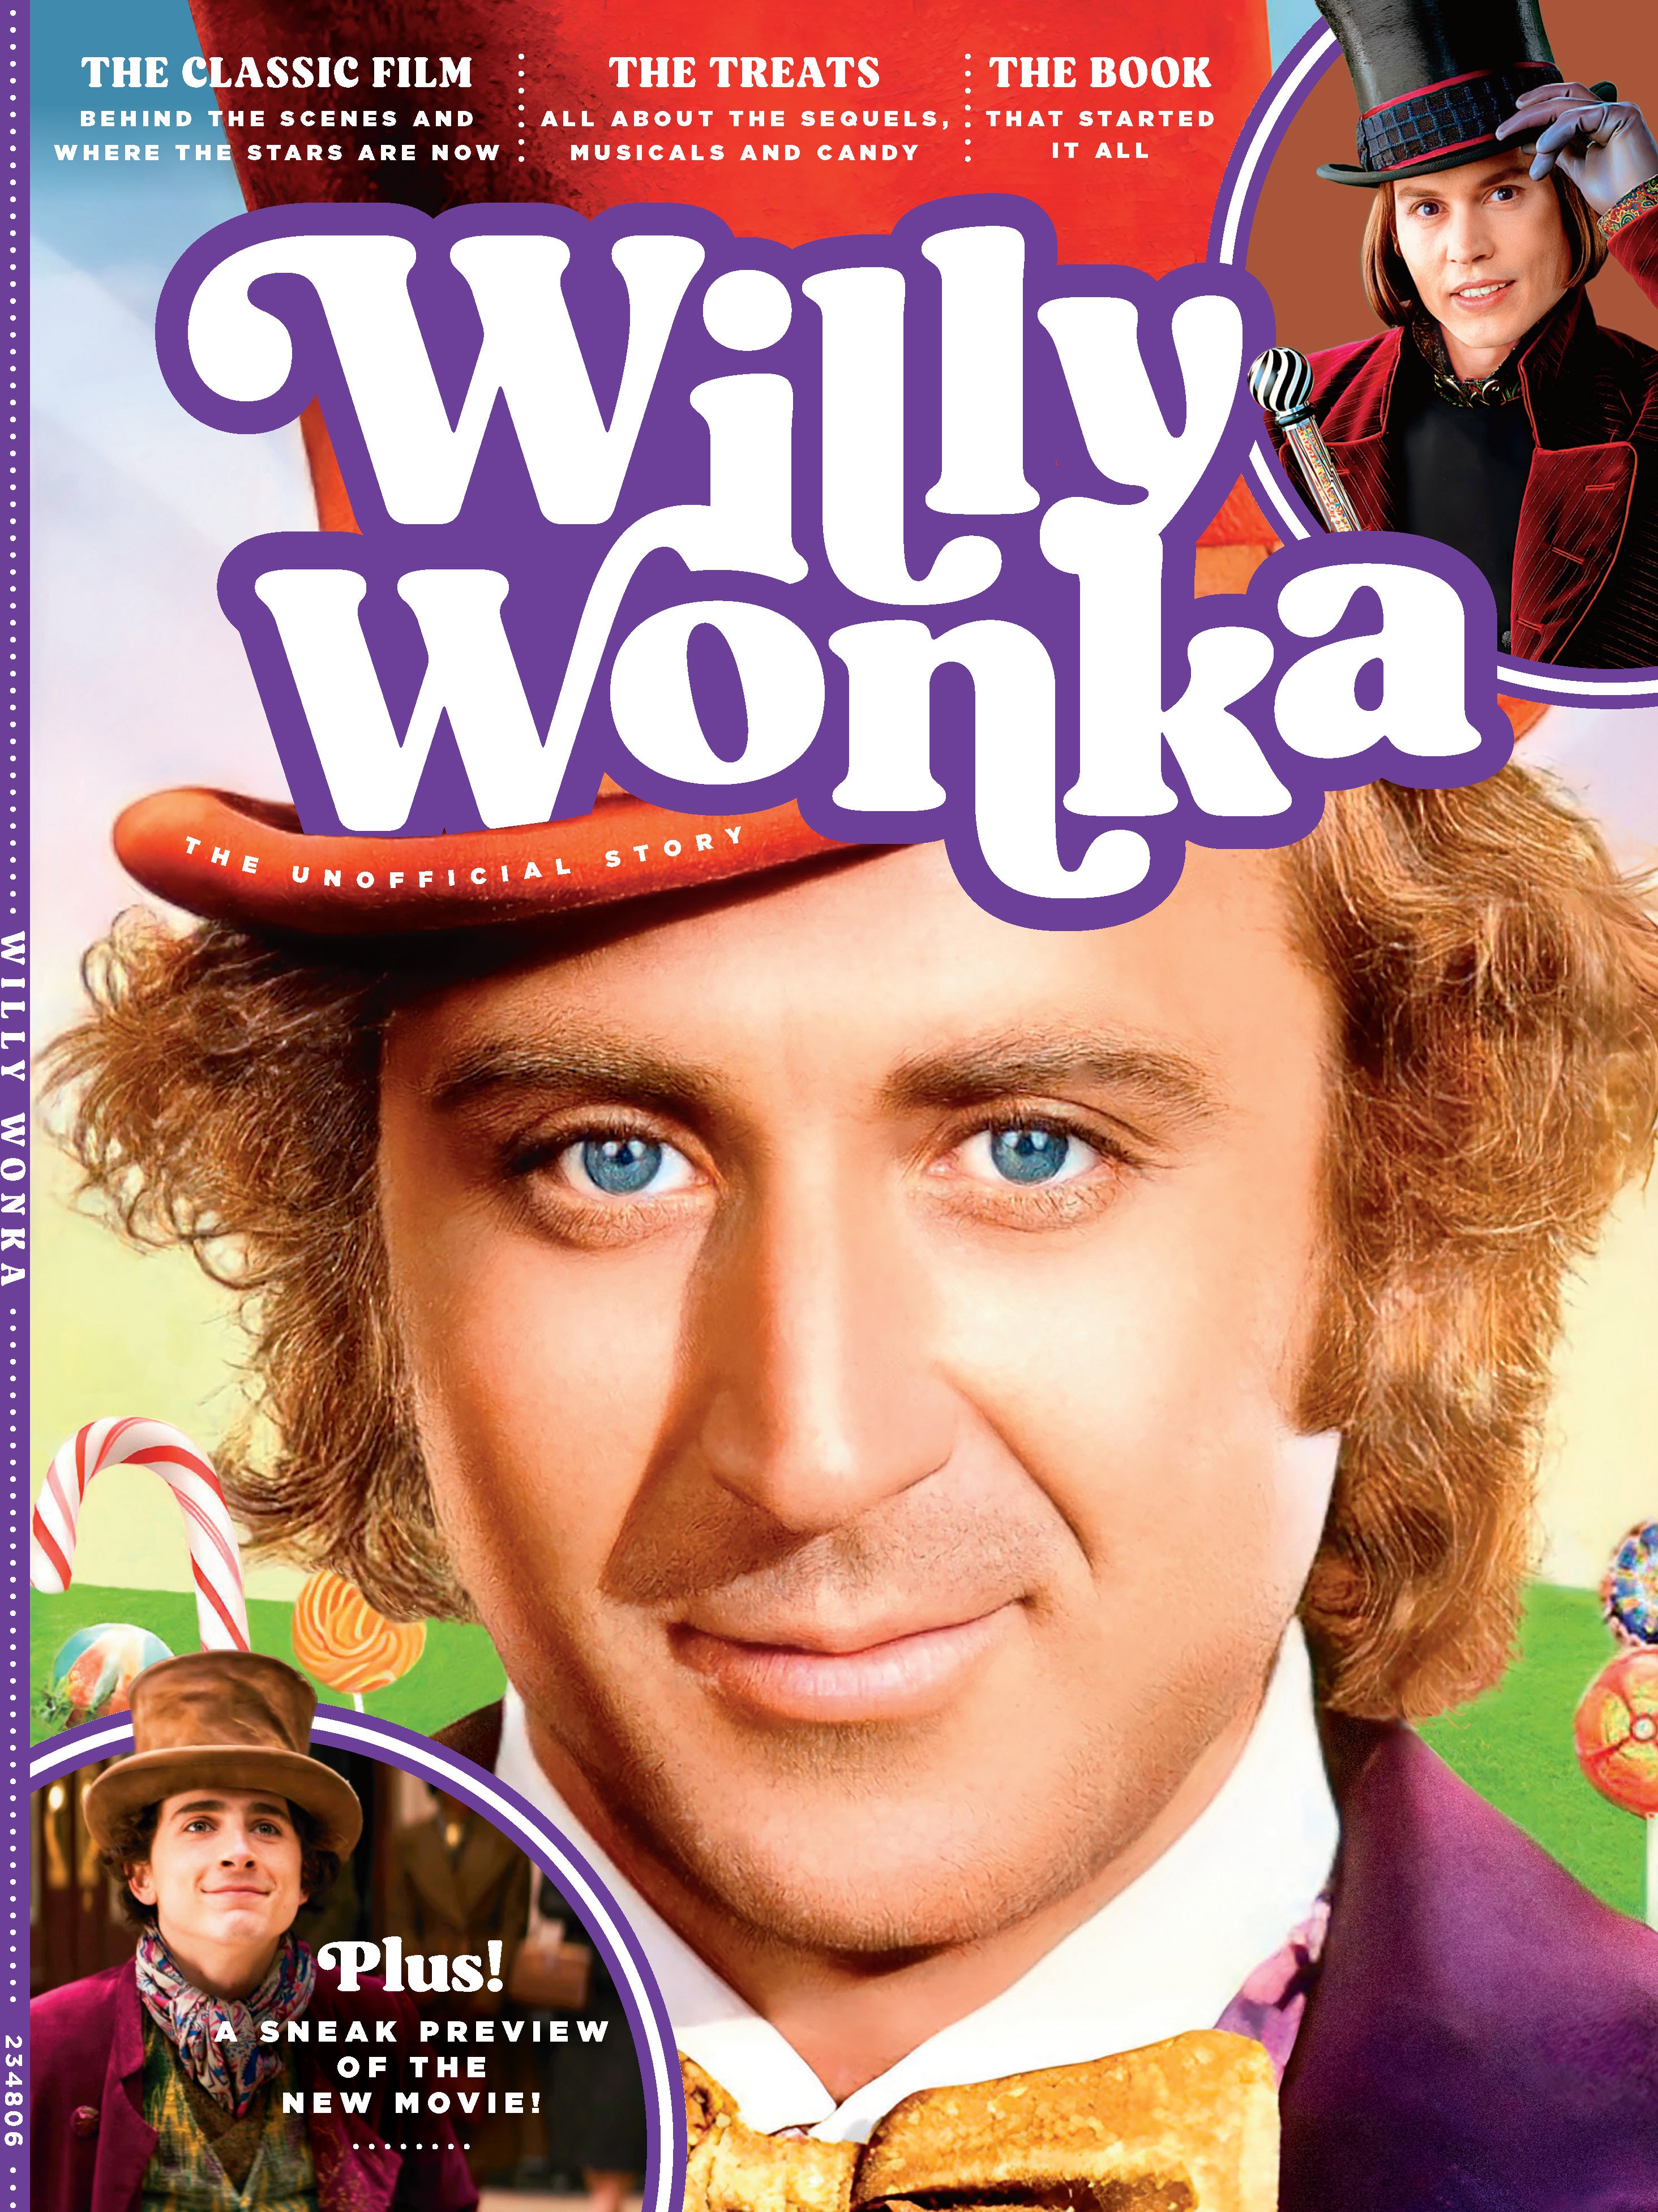 Willy Wonka - Gene Wilder, Roald Dahl Book, Broadway Musical